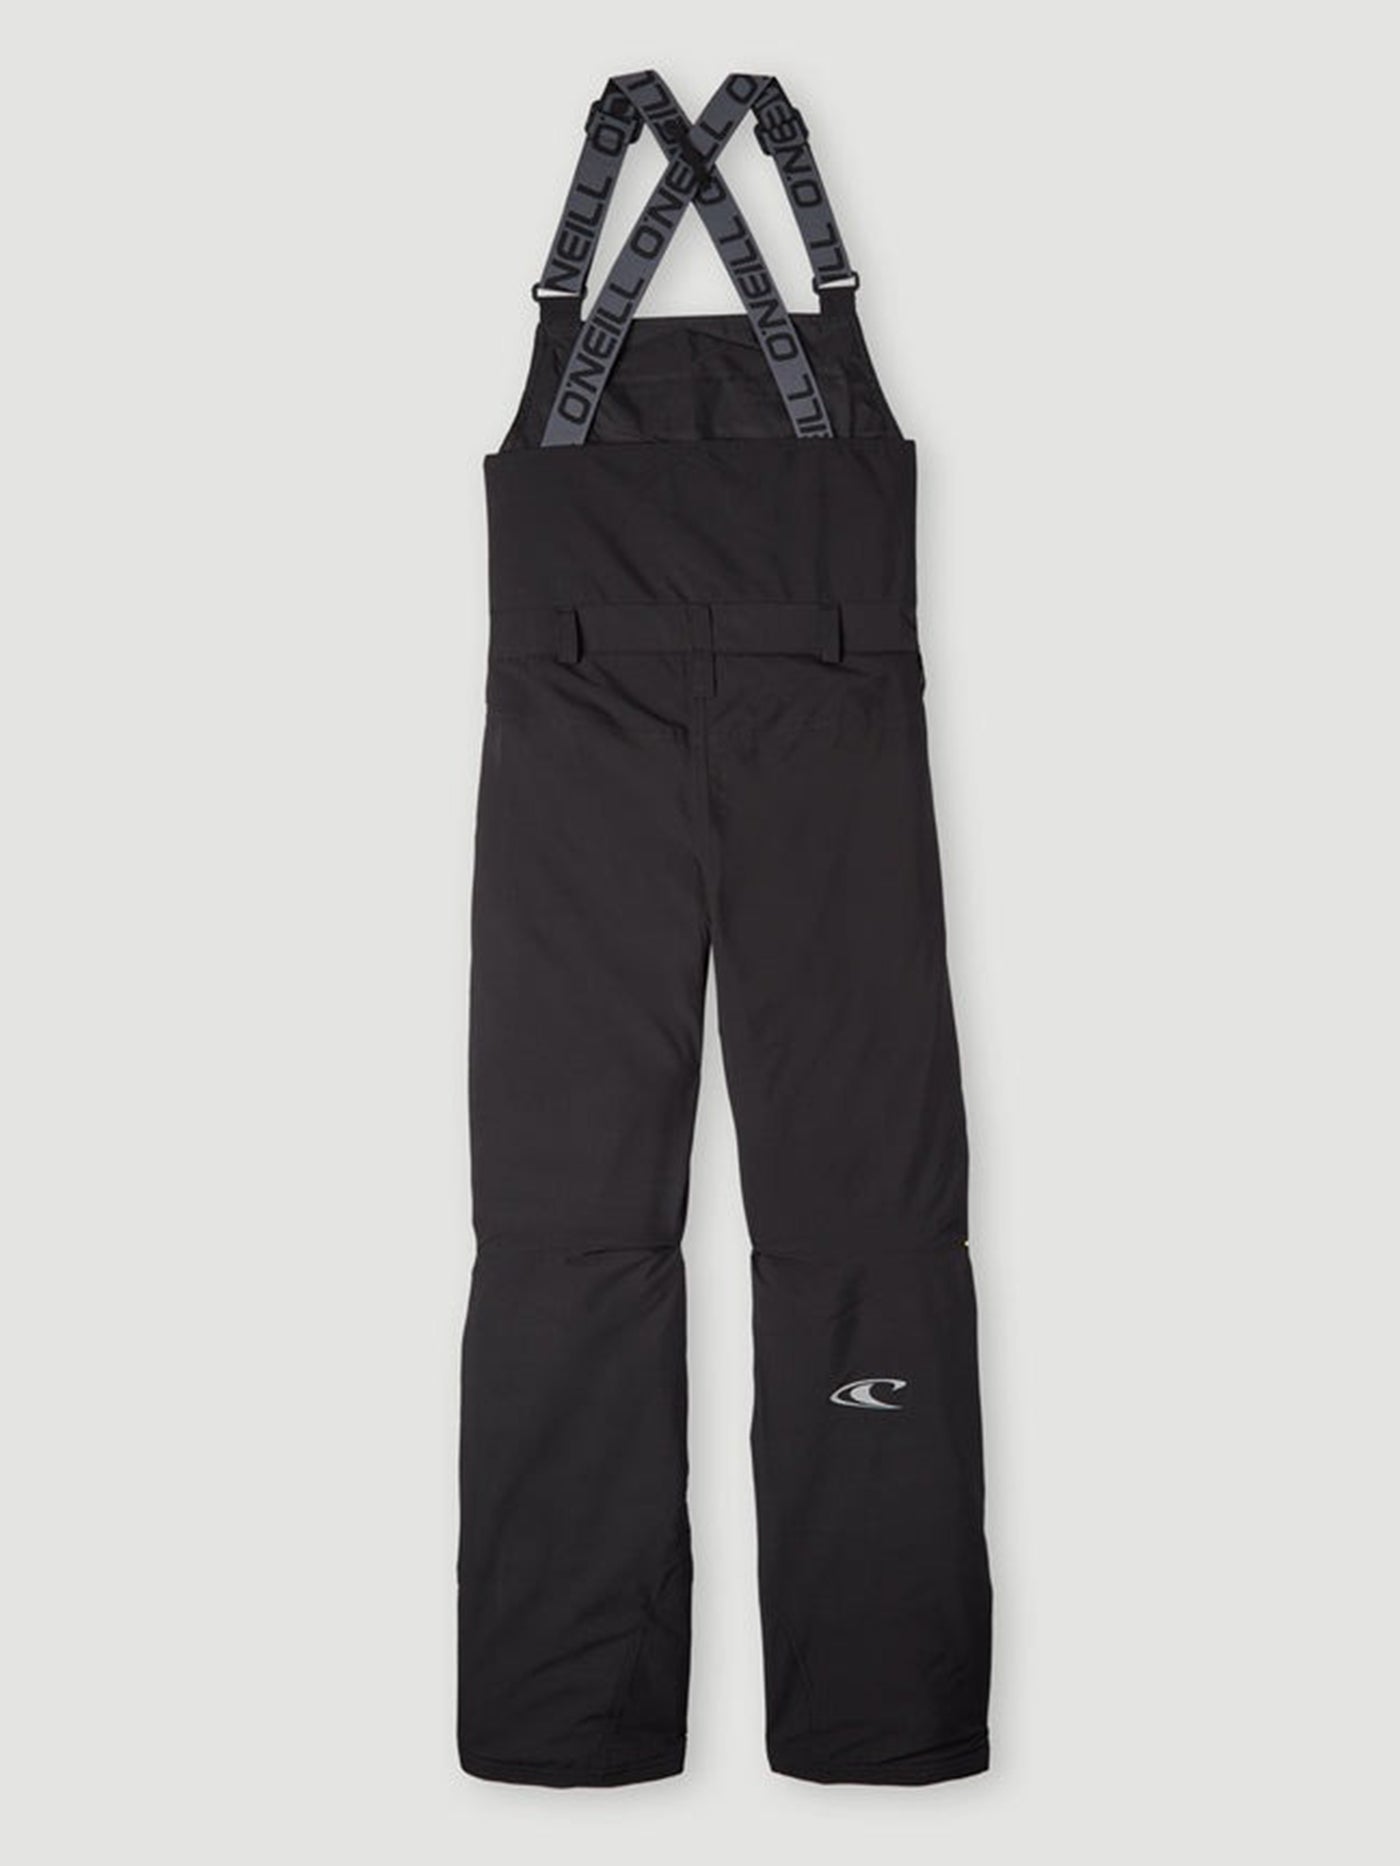  ZeroXposur Girls Snow Bib Water Repellent Insulated Kids Ski  Pants (Black, 3) : Clothing, Shoes & Jewelry